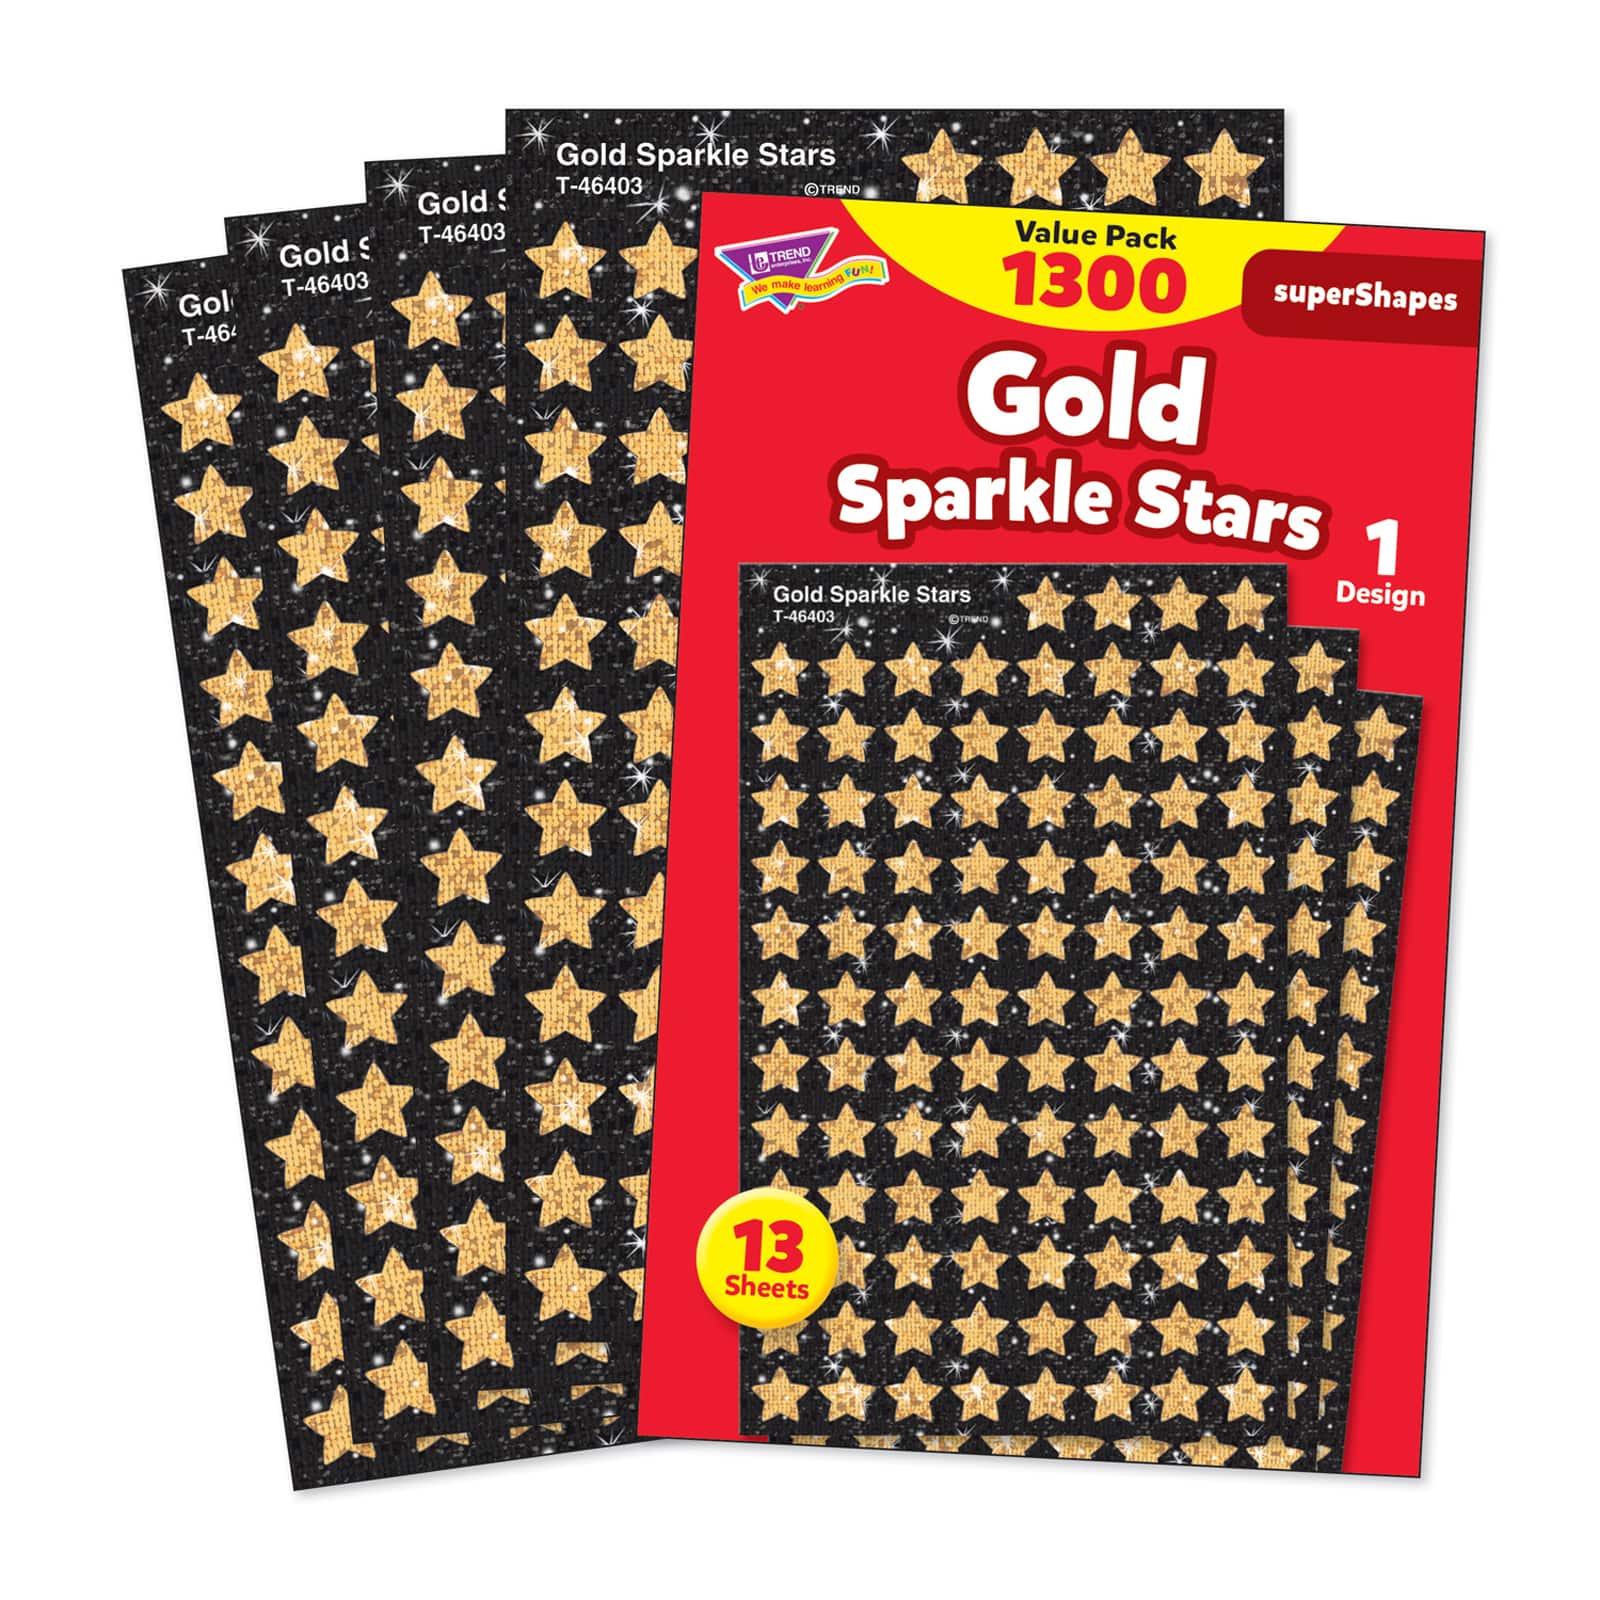 Trend Enterprises&#xAE; superShapes Gold Sparkle Stars, 3 Packs of 1,300